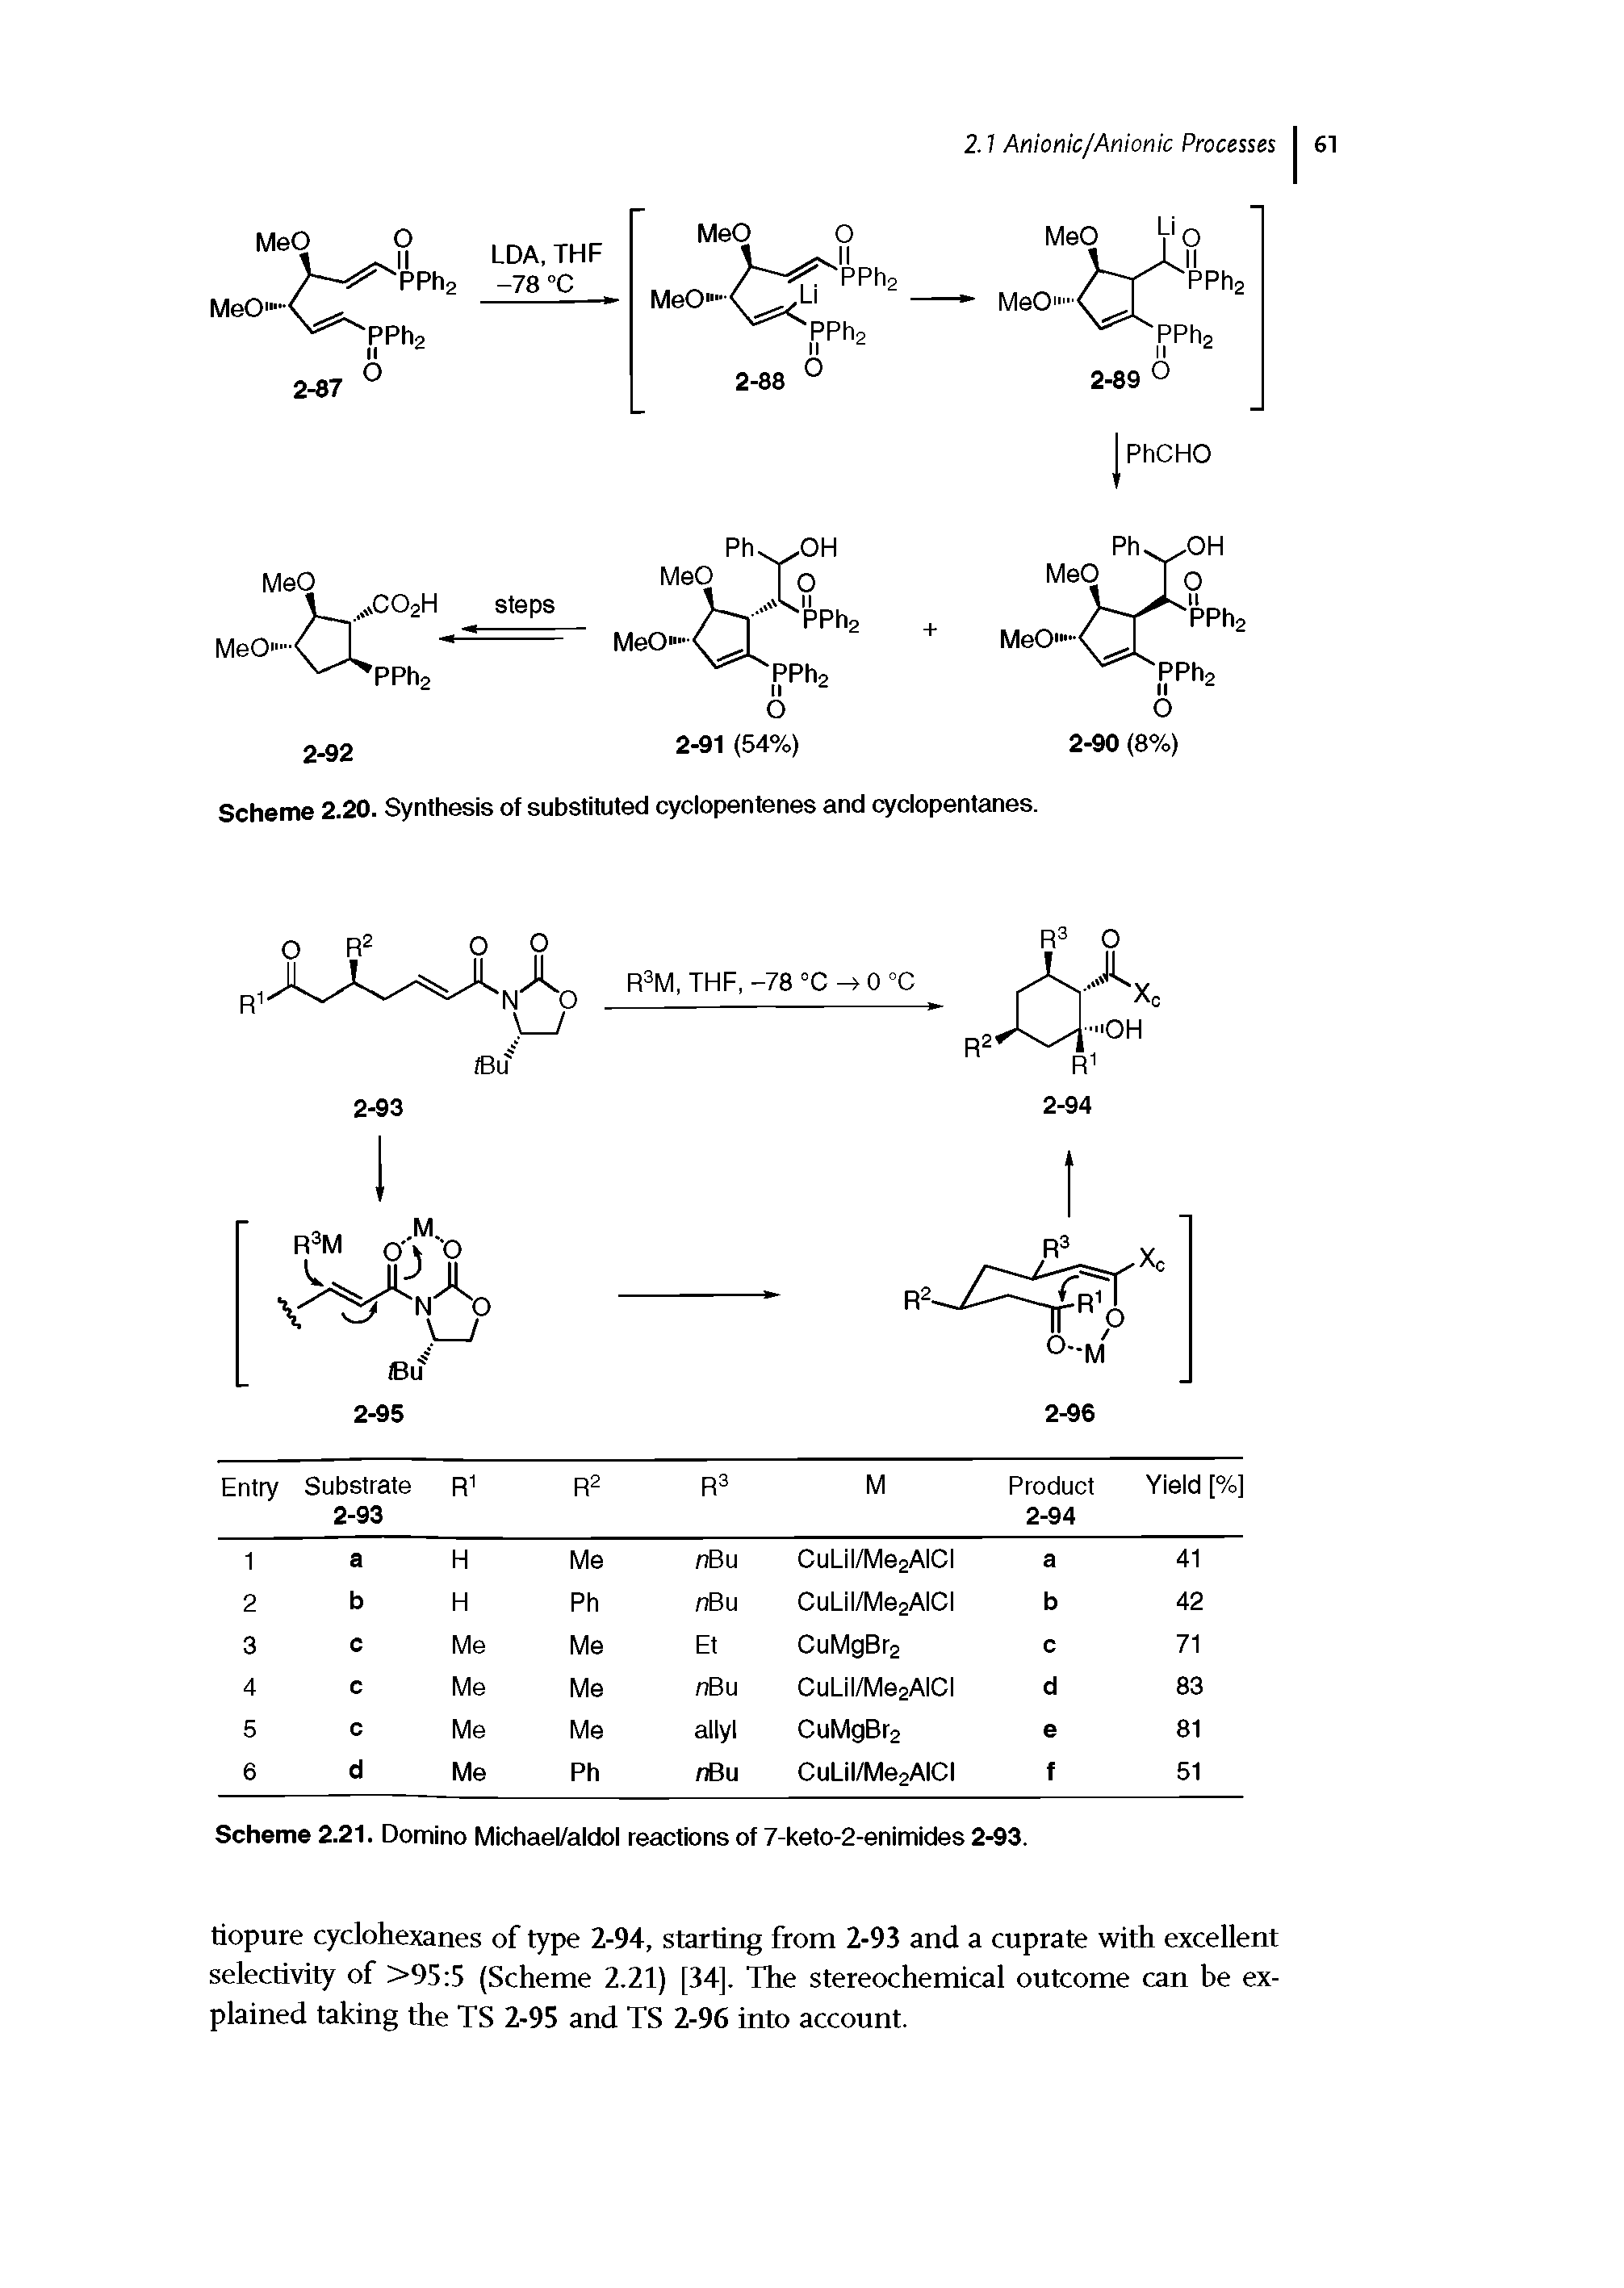 Scheme 2.21. Domino Michael/aldol reactions of 7-keto-2-enimides 2-93.